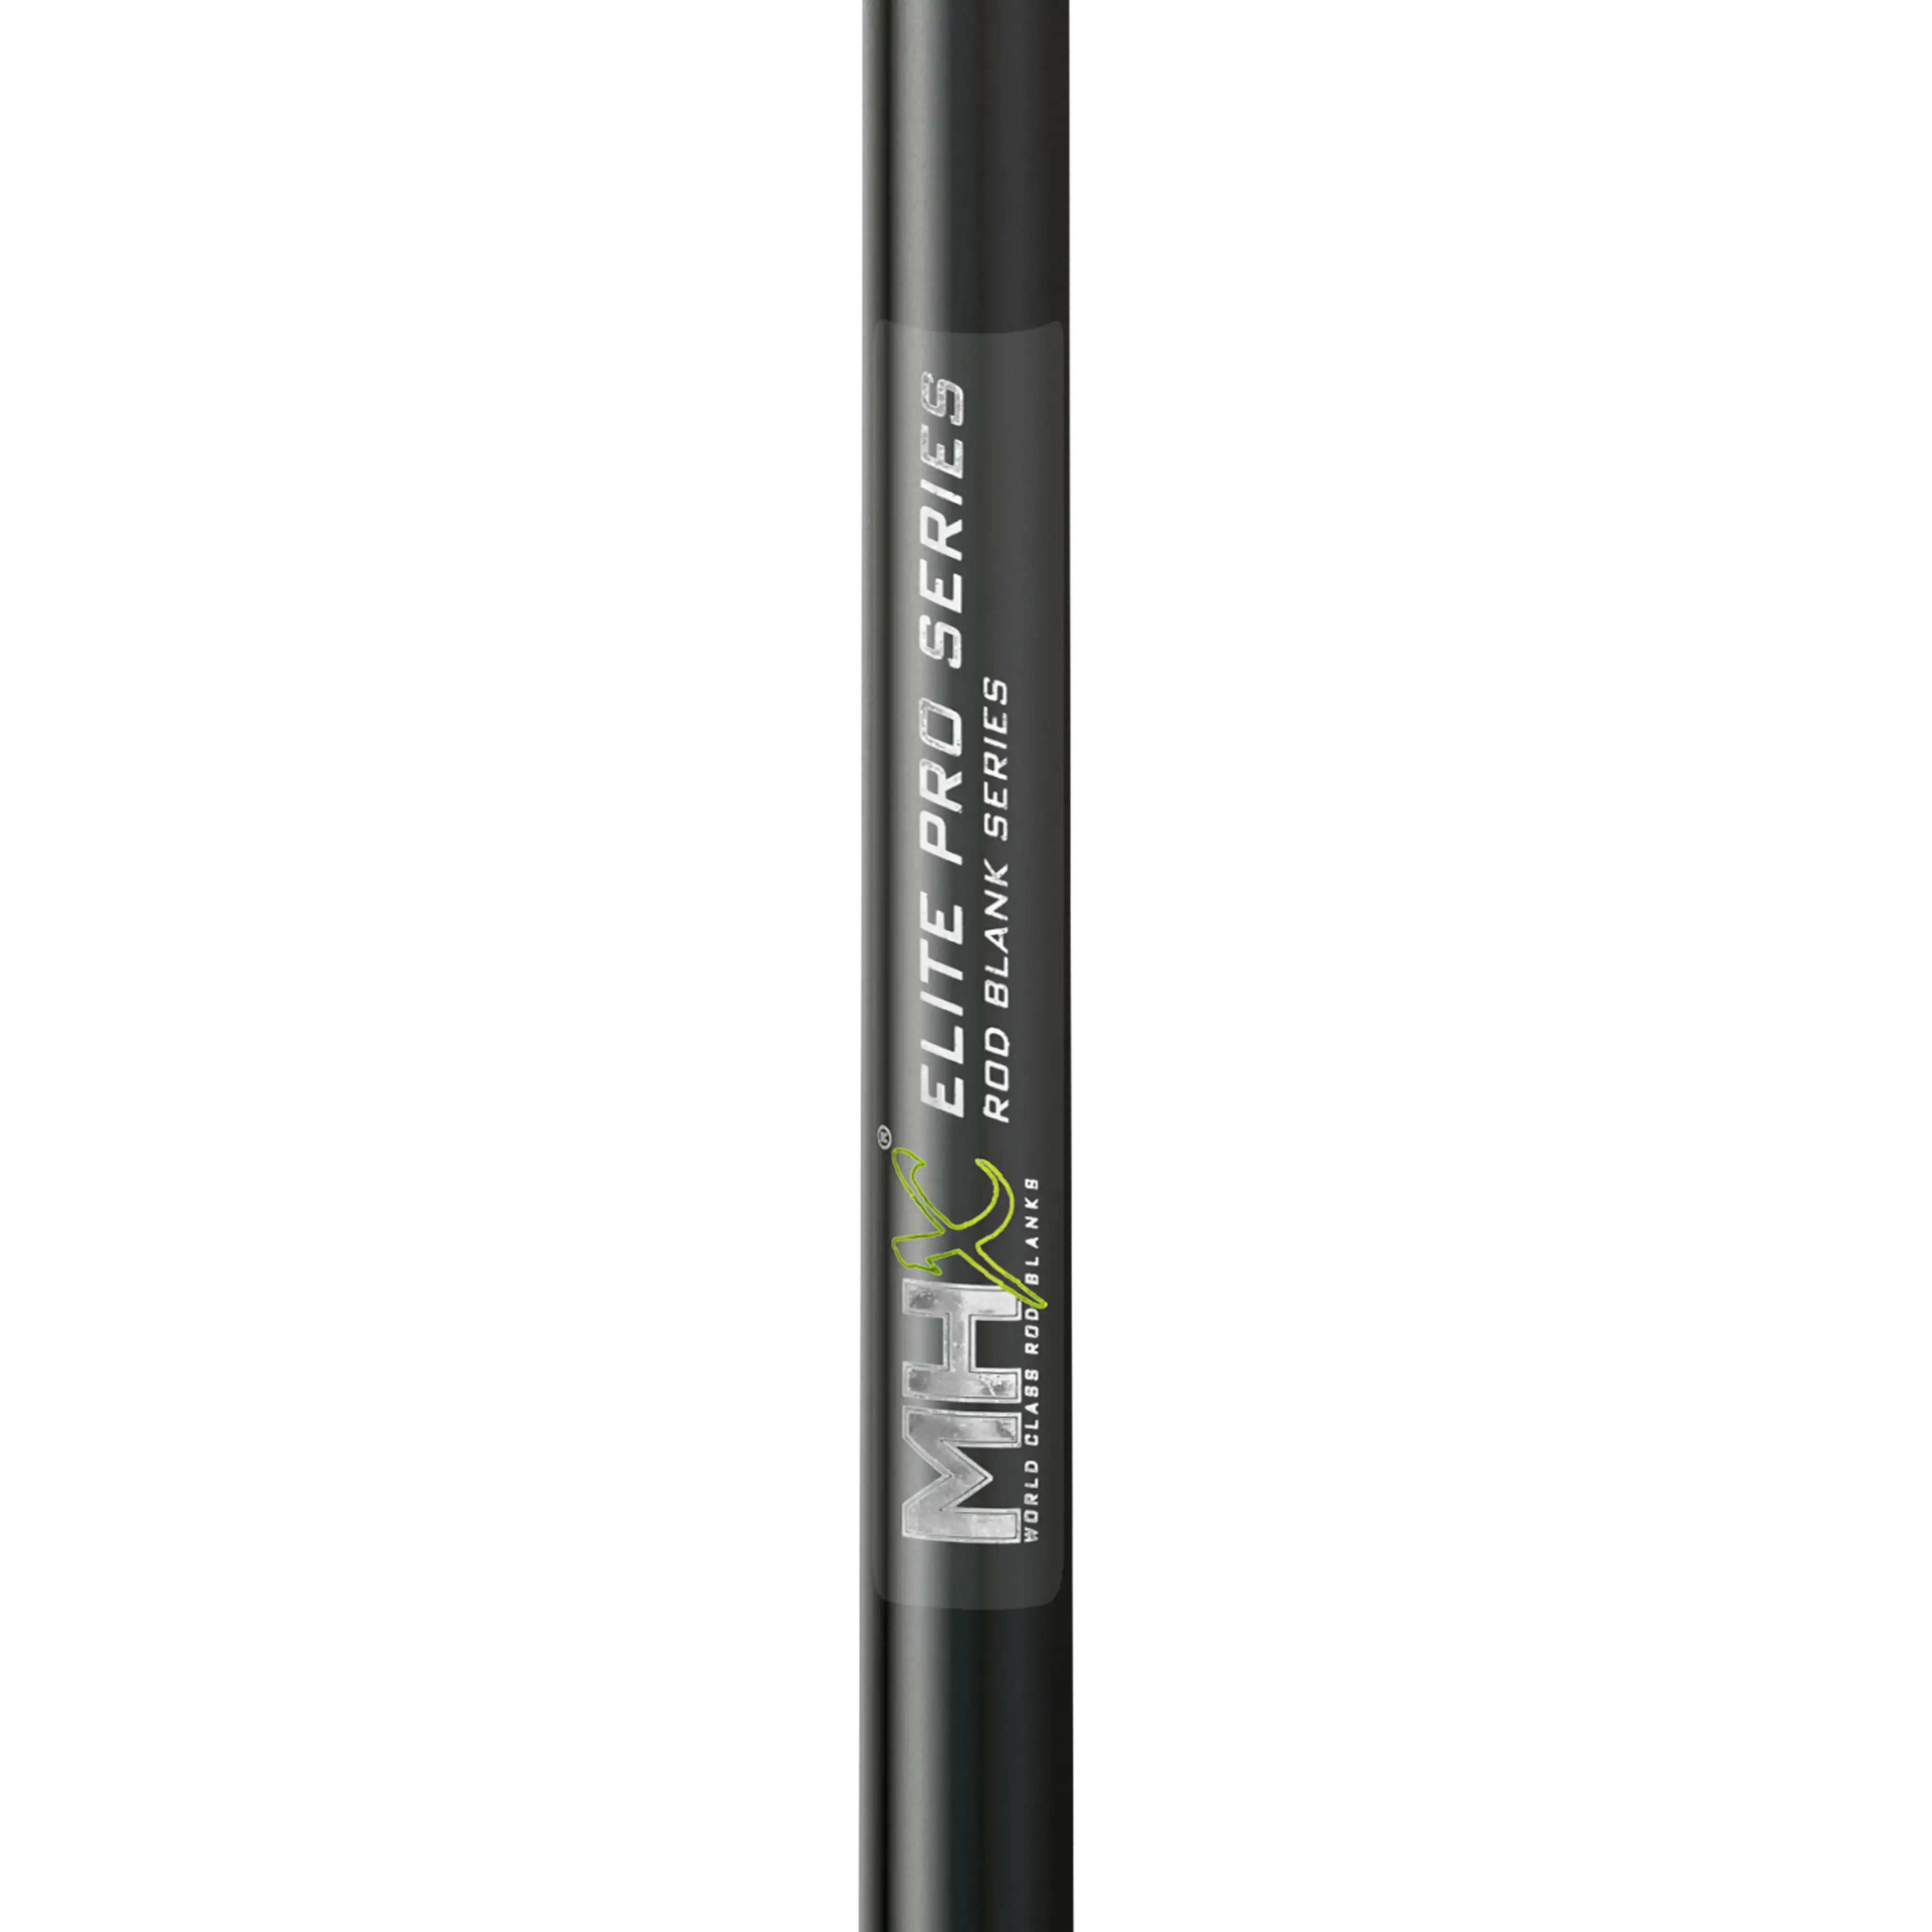 MHX Elite Pro Rod Blanks